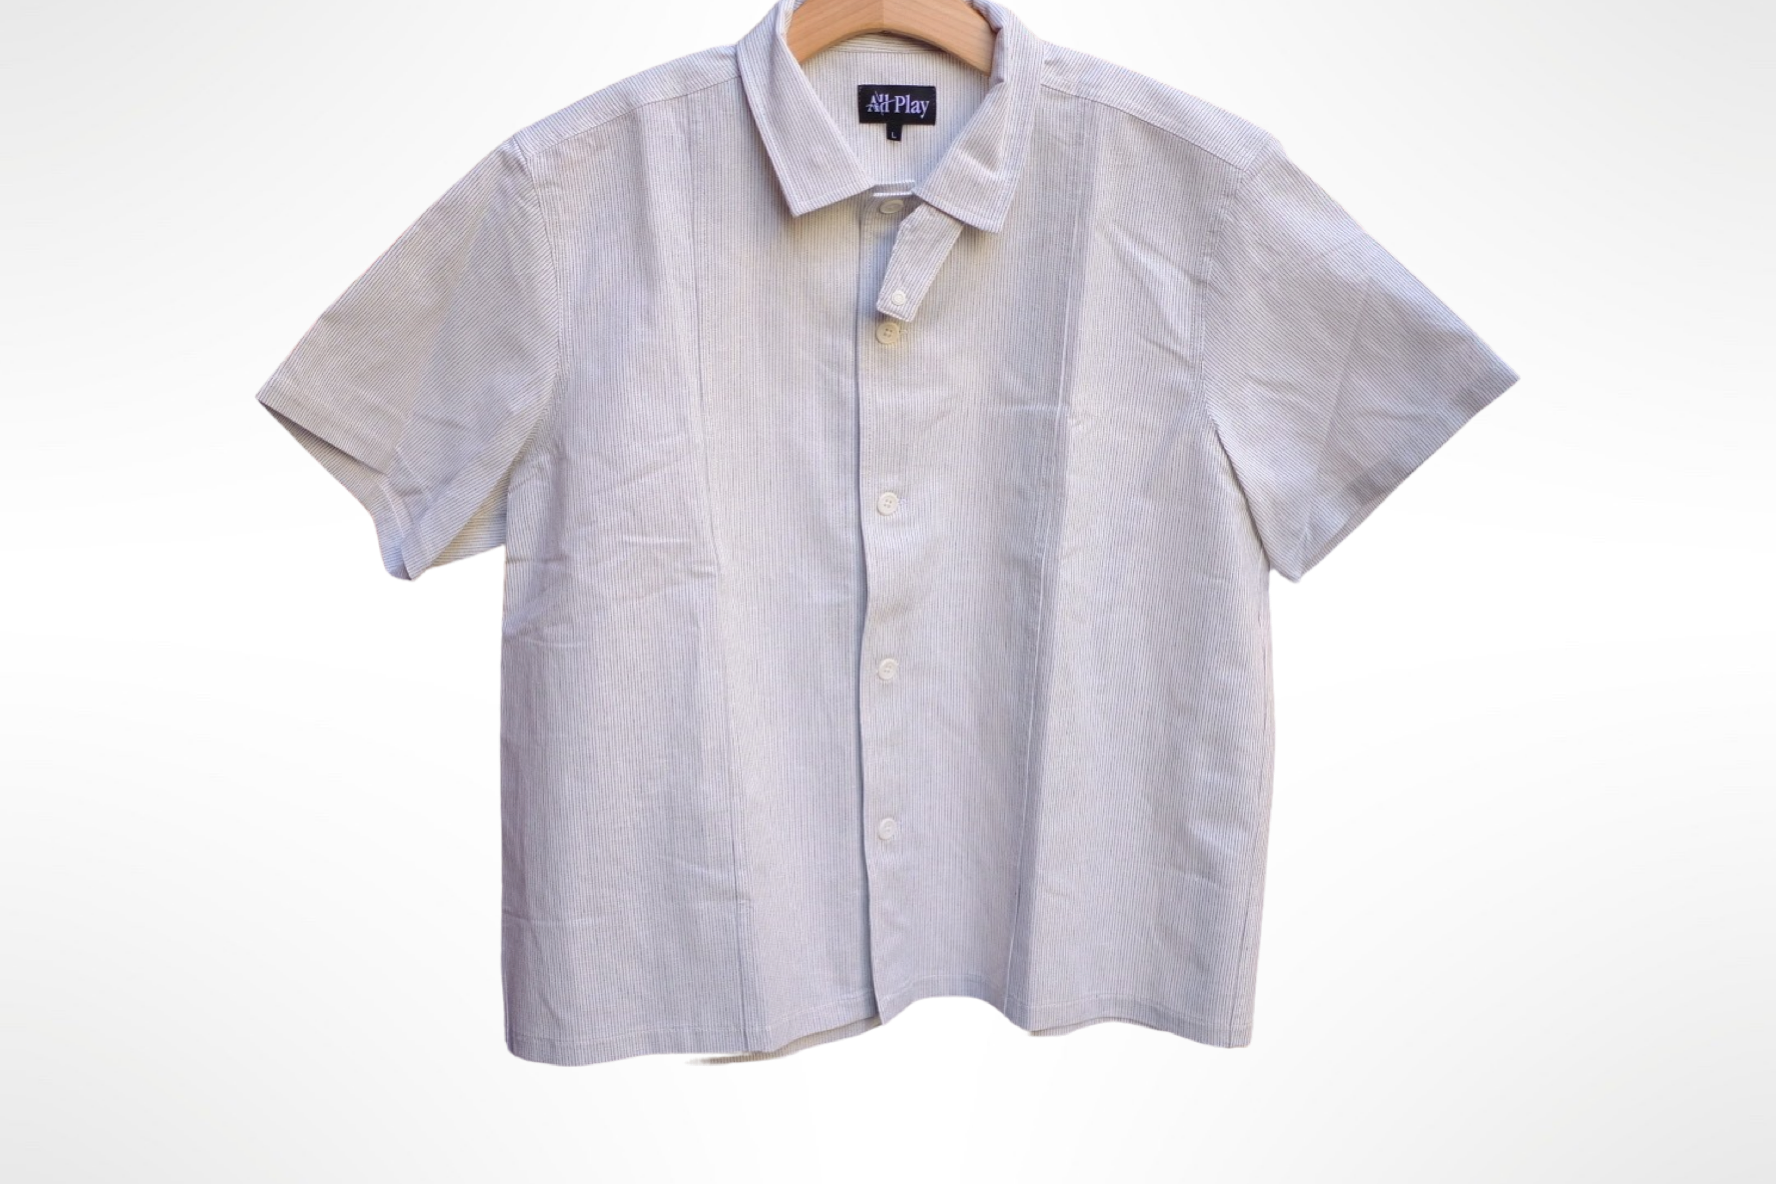 chelsea camp collar shirt in white/navy stripe